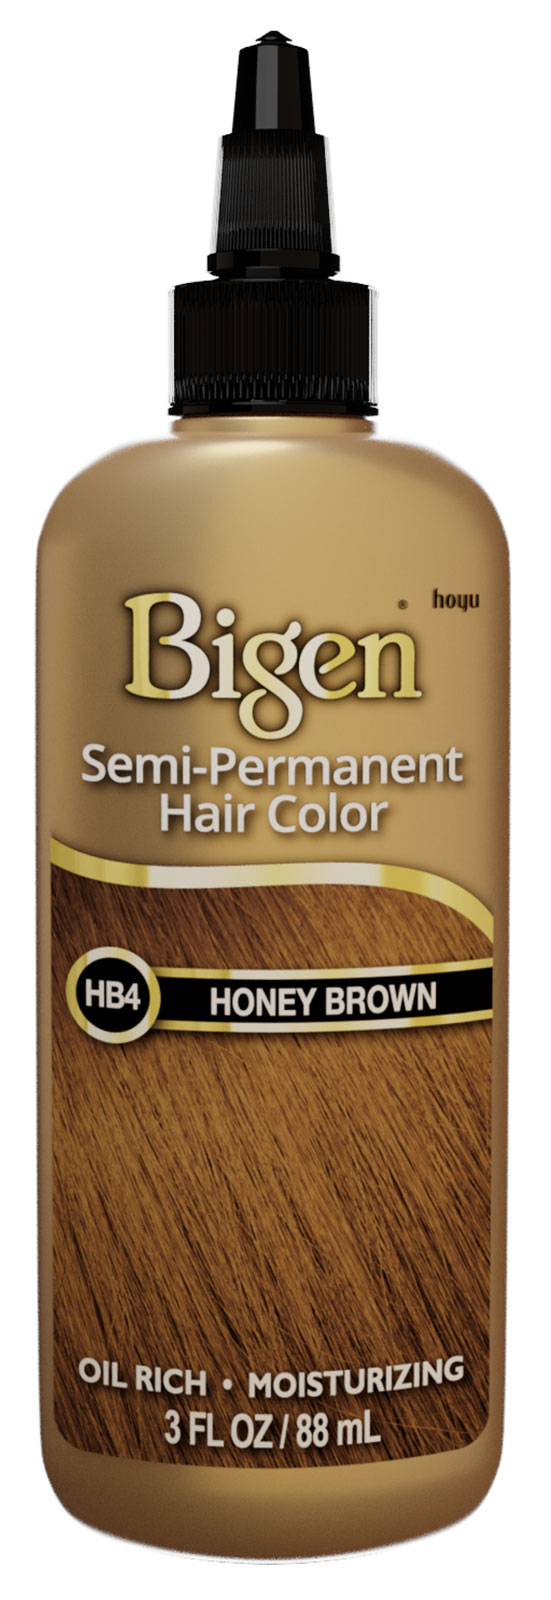 HB4-Honey Brown